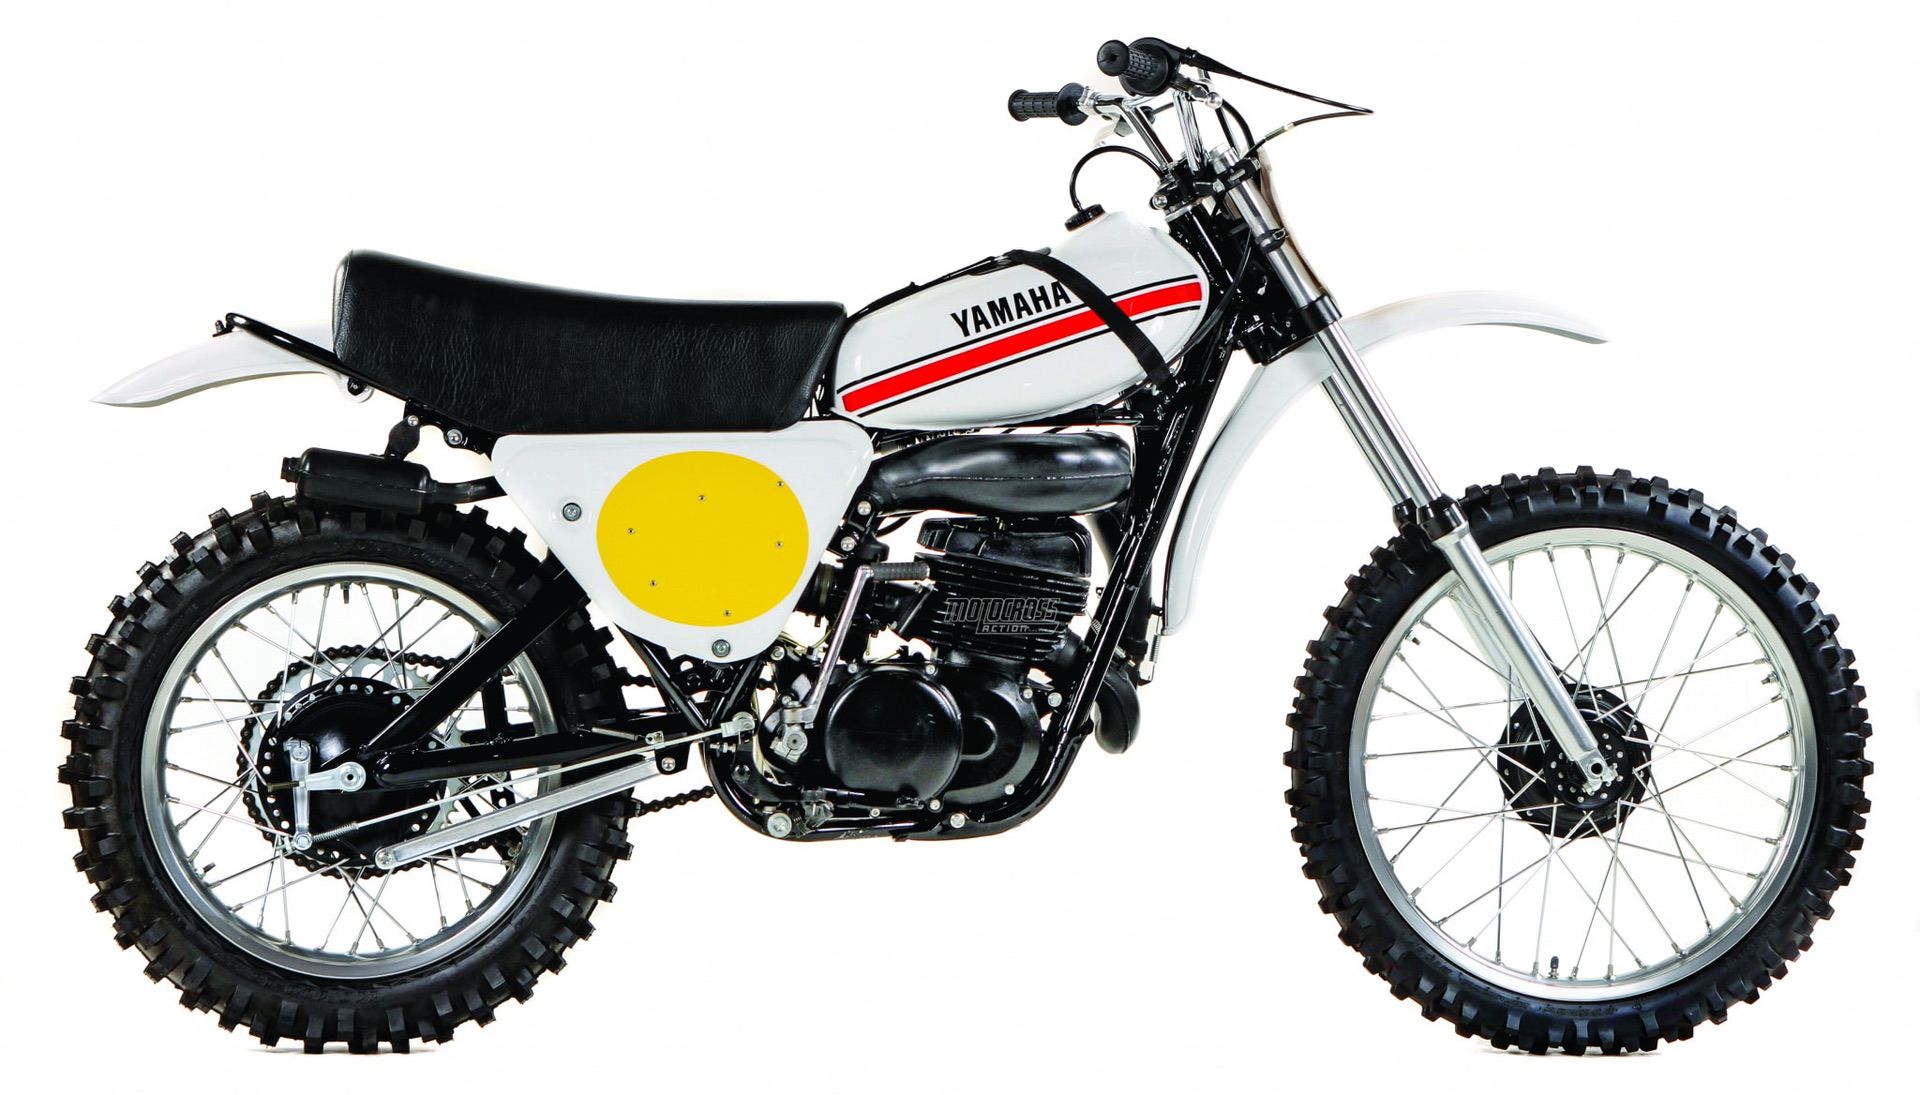 A ’74 Yamaha YZ360 motocross motorcycle